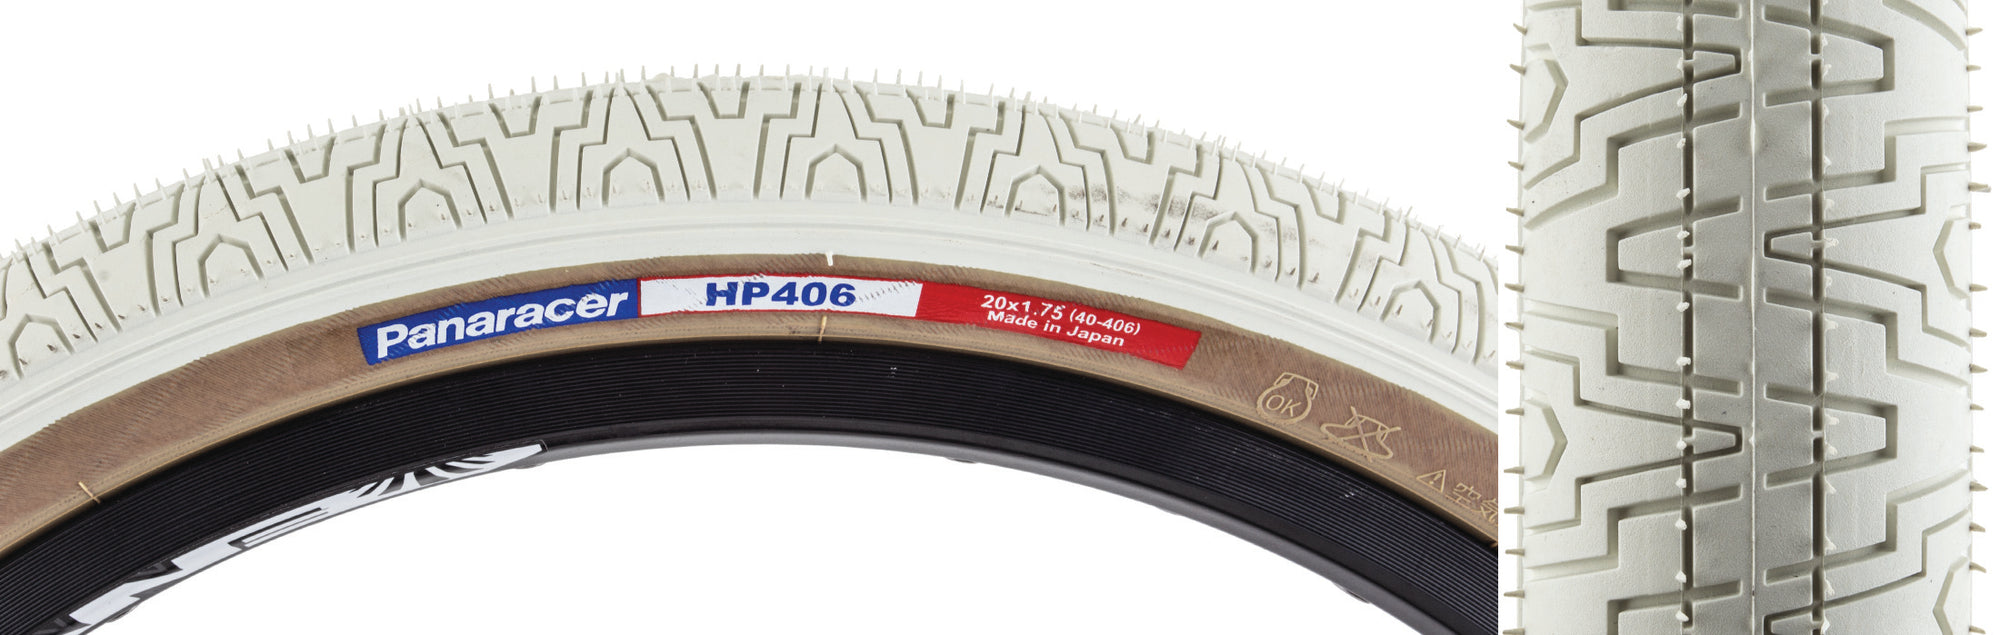 20x1.75 Panaracer HP406 Freestyle BMX tire - White w/ Skinwall